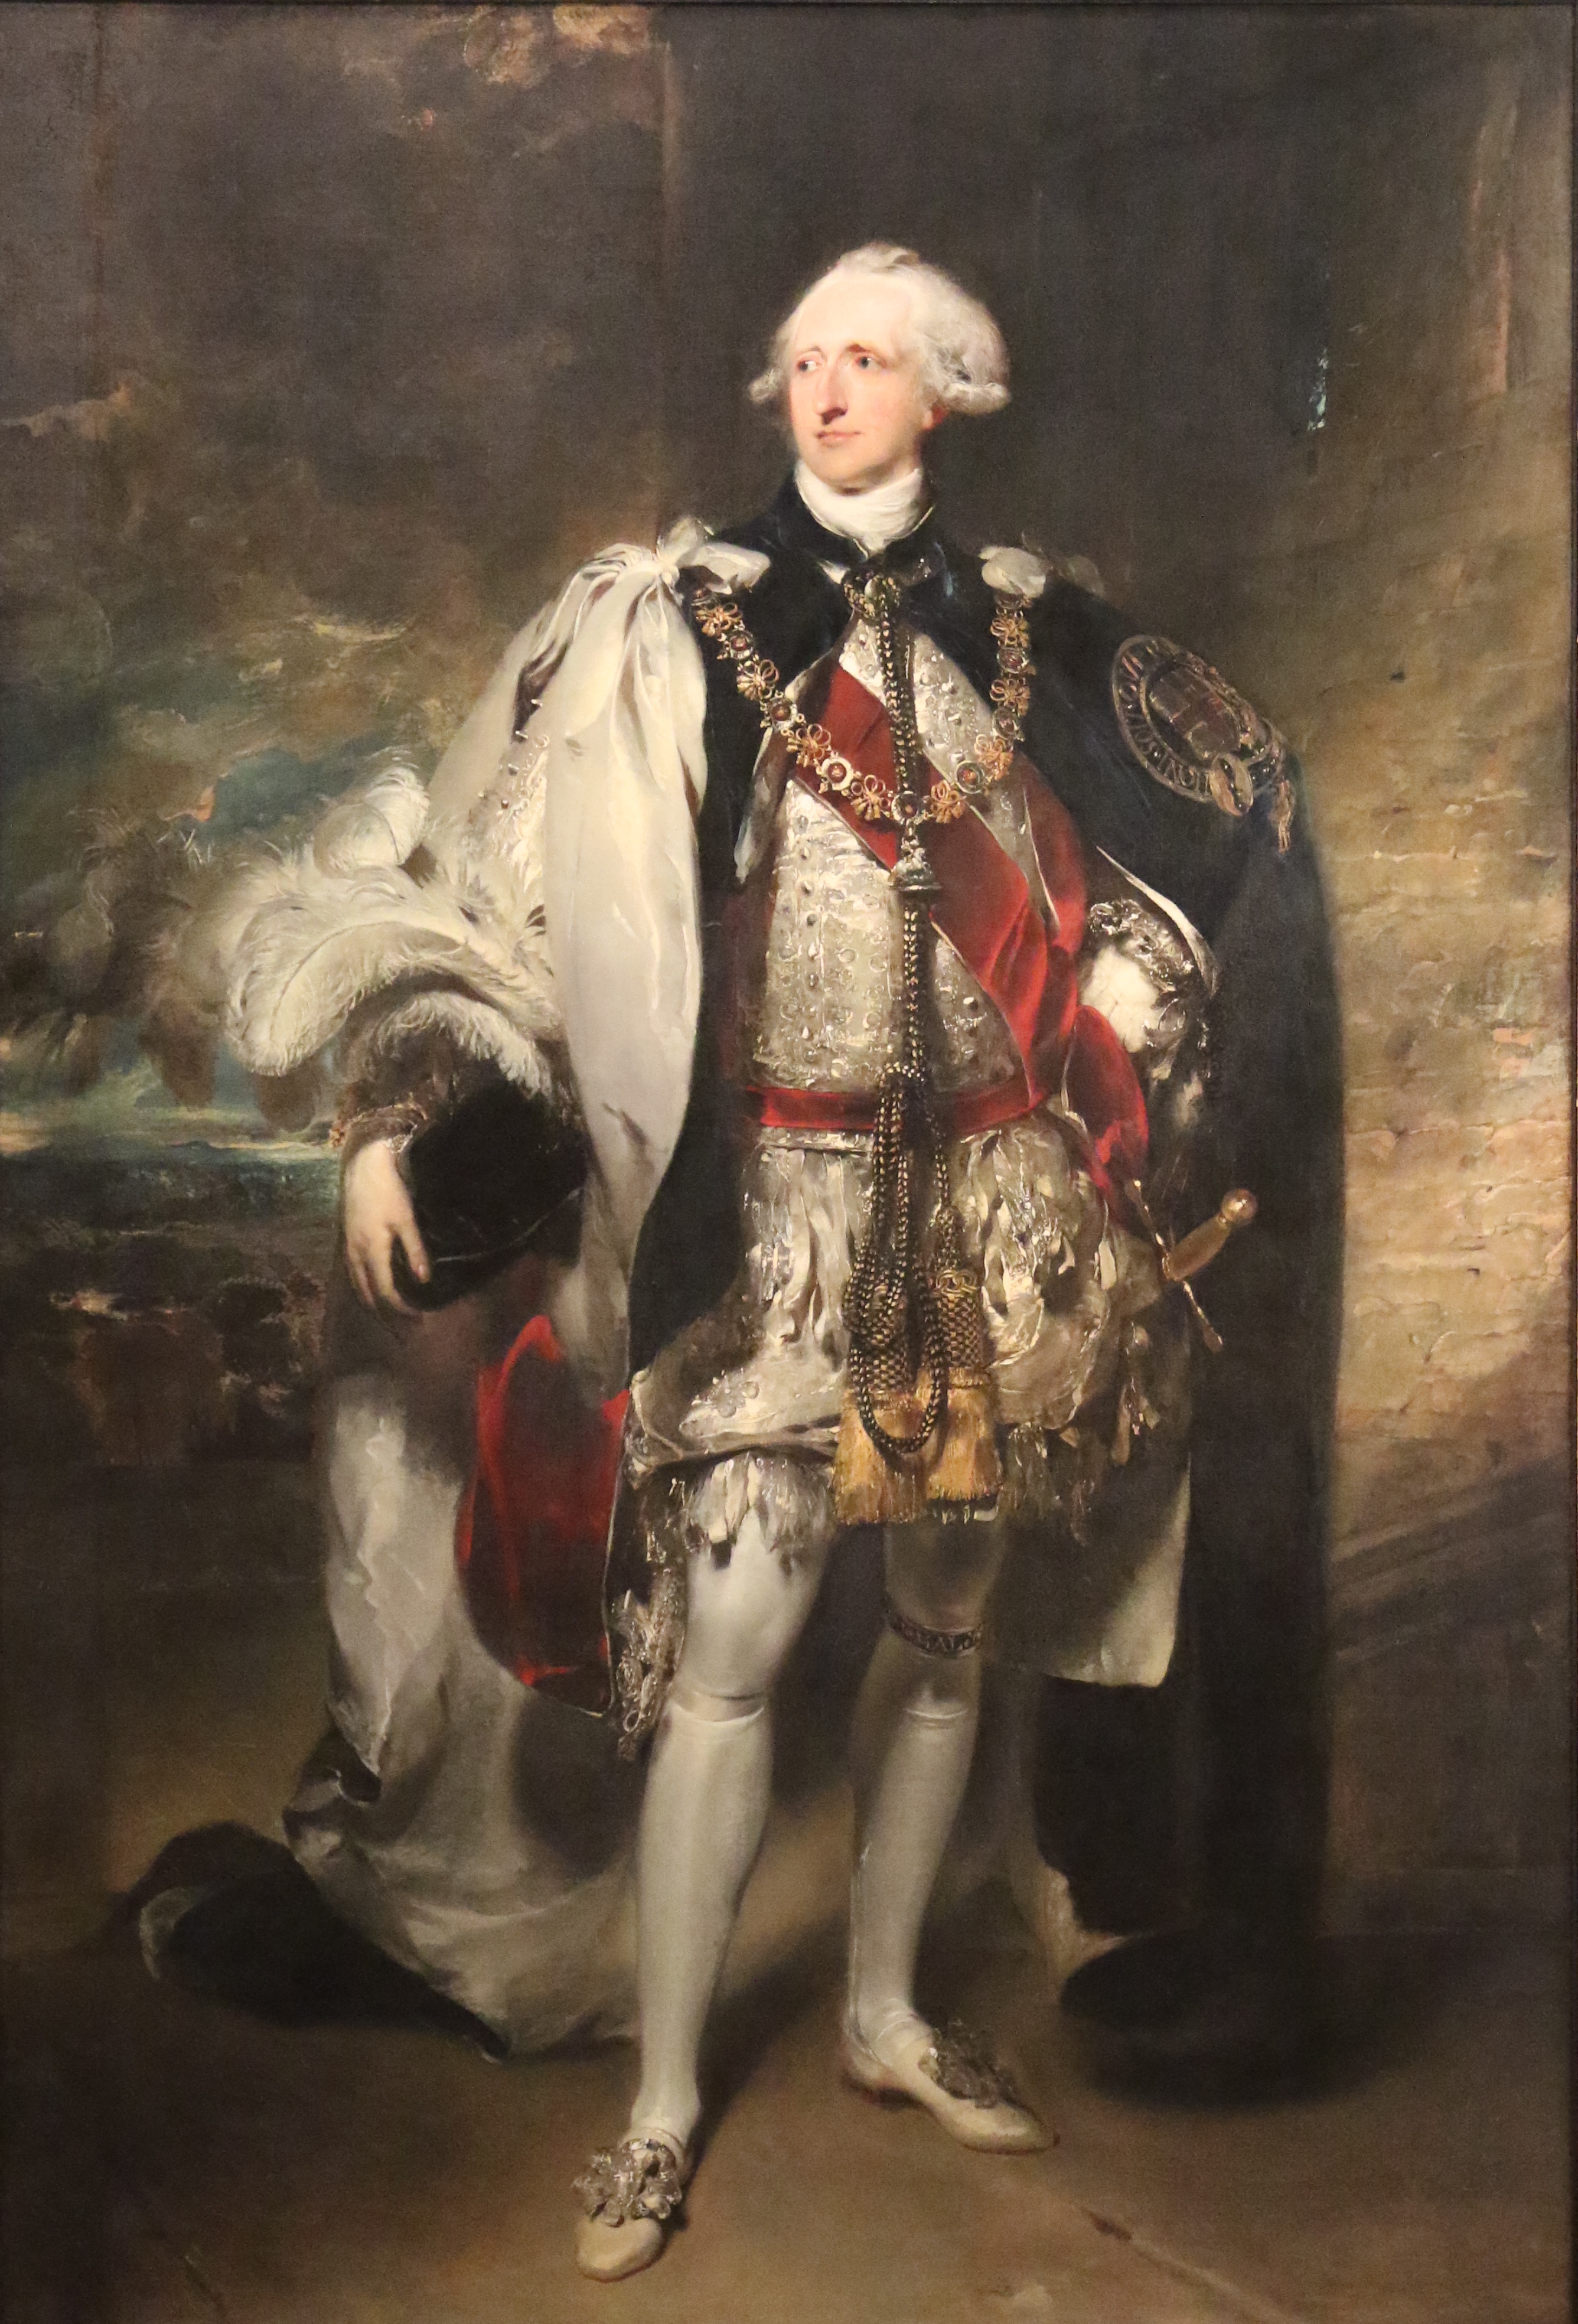 Sprængstoffer makeup Også File:Francis Osborne, 5th Duke of Leeds.jpg - Wikimedia Commons